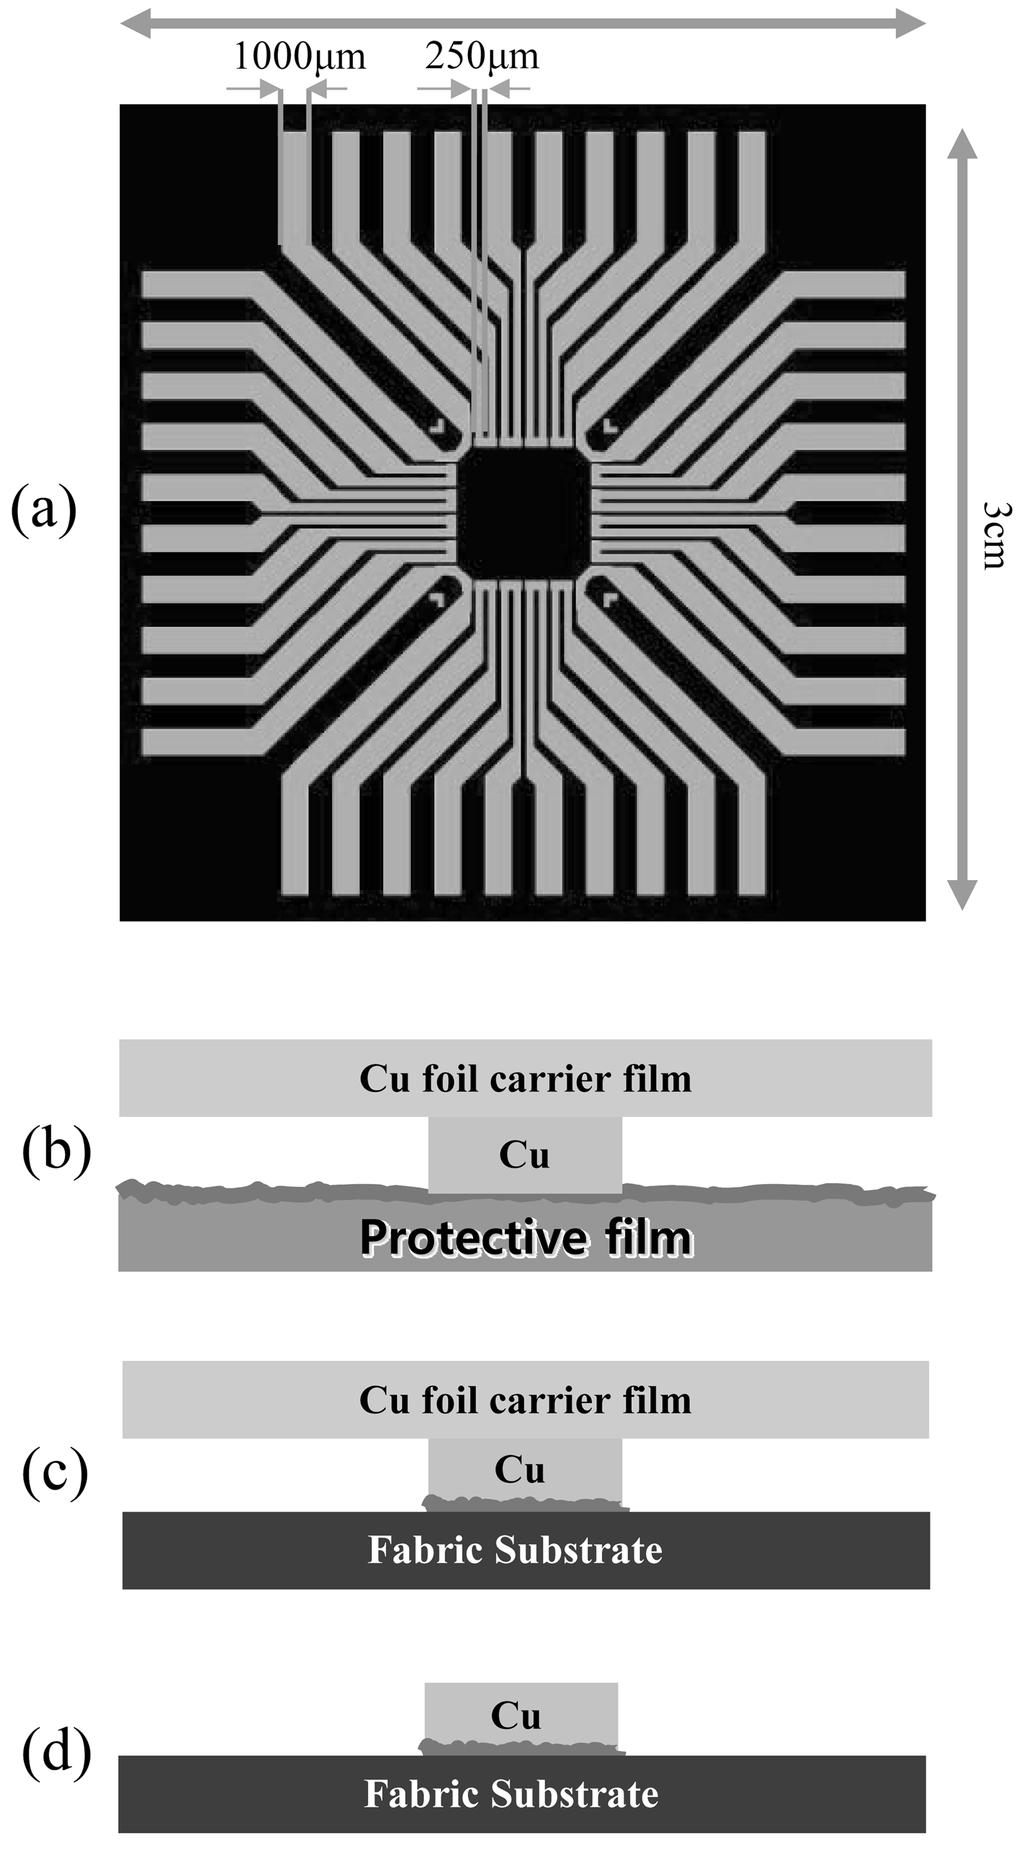 SnBi 저온솔더의 플립칩 본딩을 이용한 스마트 의류용 칩 접속공정 를 스퍼터 증착하여 Ti/Cu/Ti 다층구조를 형성하였다. 칩 회로배선 패턴을 제작하기 위해 Fig.